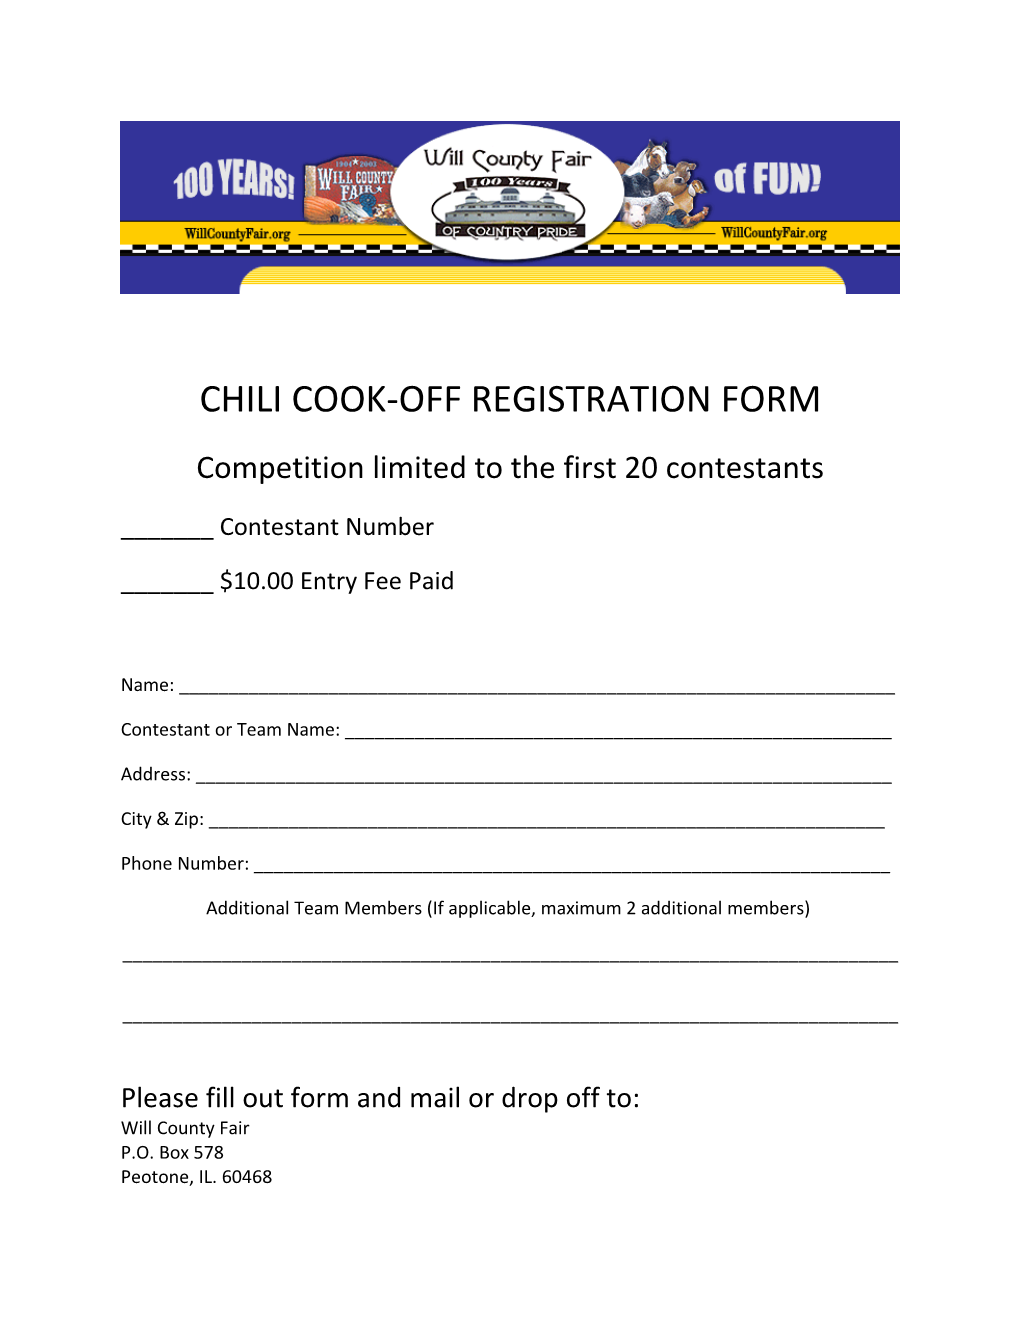 Chili Cook-Off Registration Form